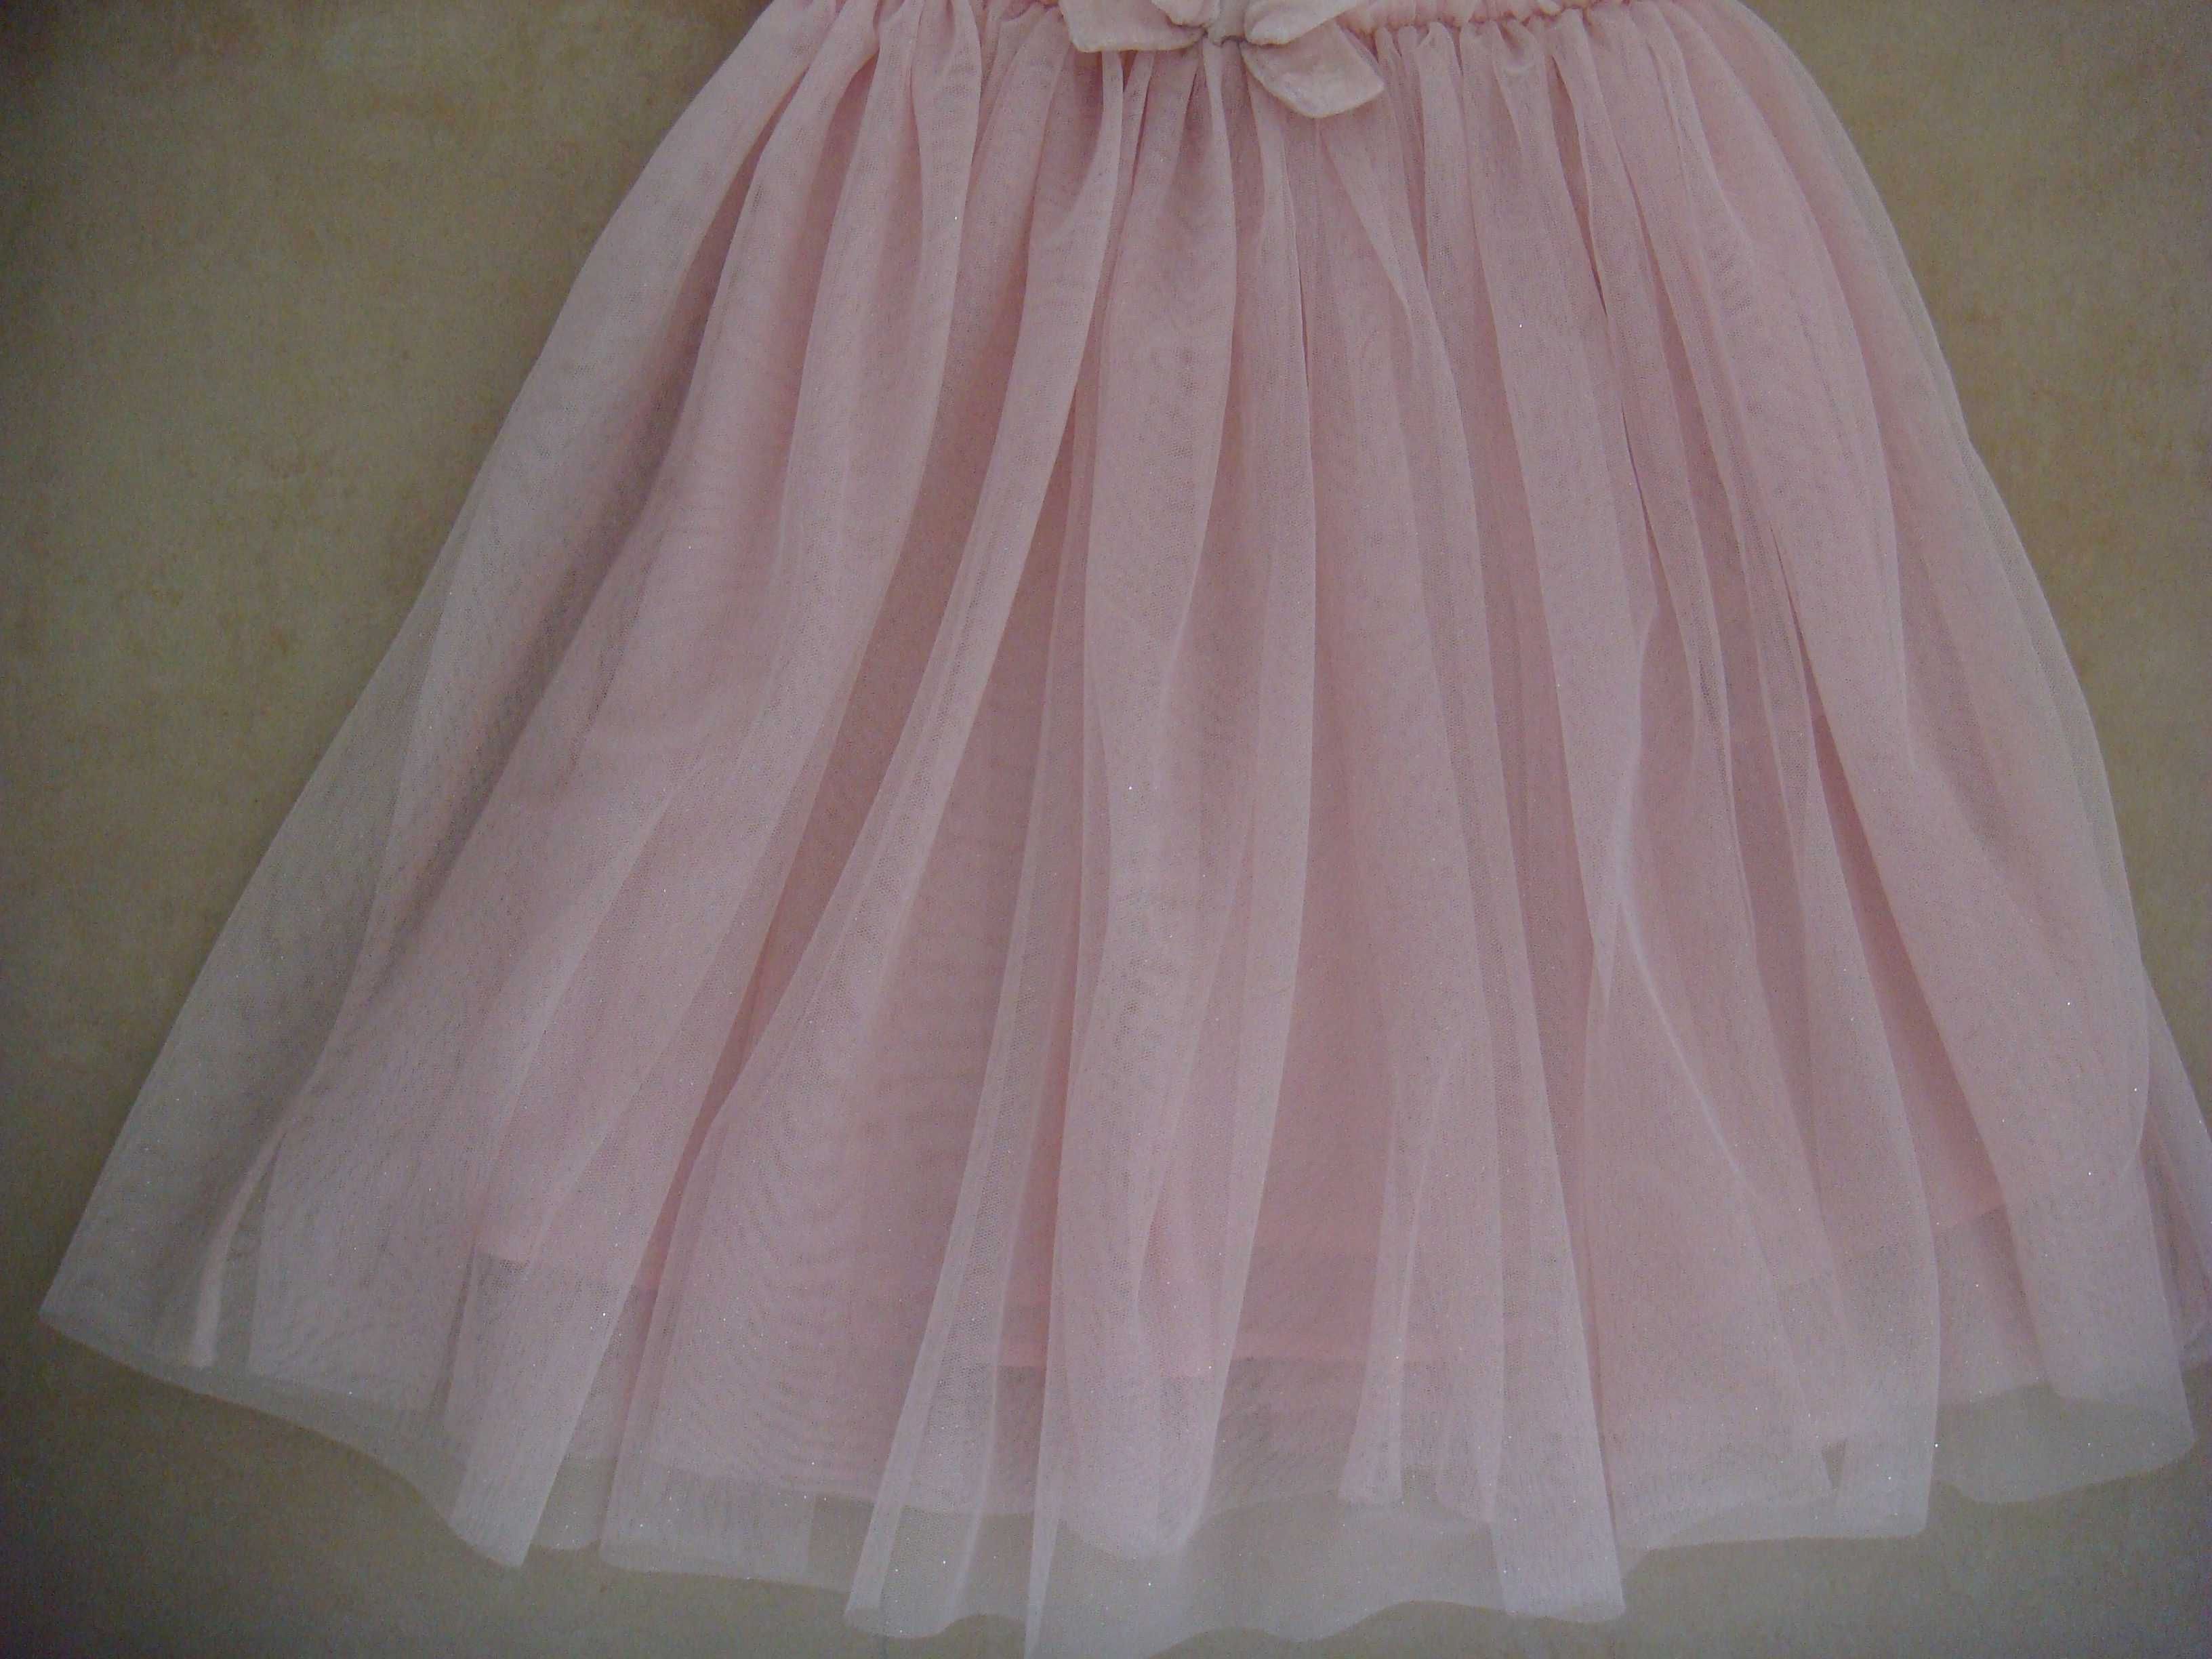 PIĘKNA sukienka H&M roz. 128 - jak nowa